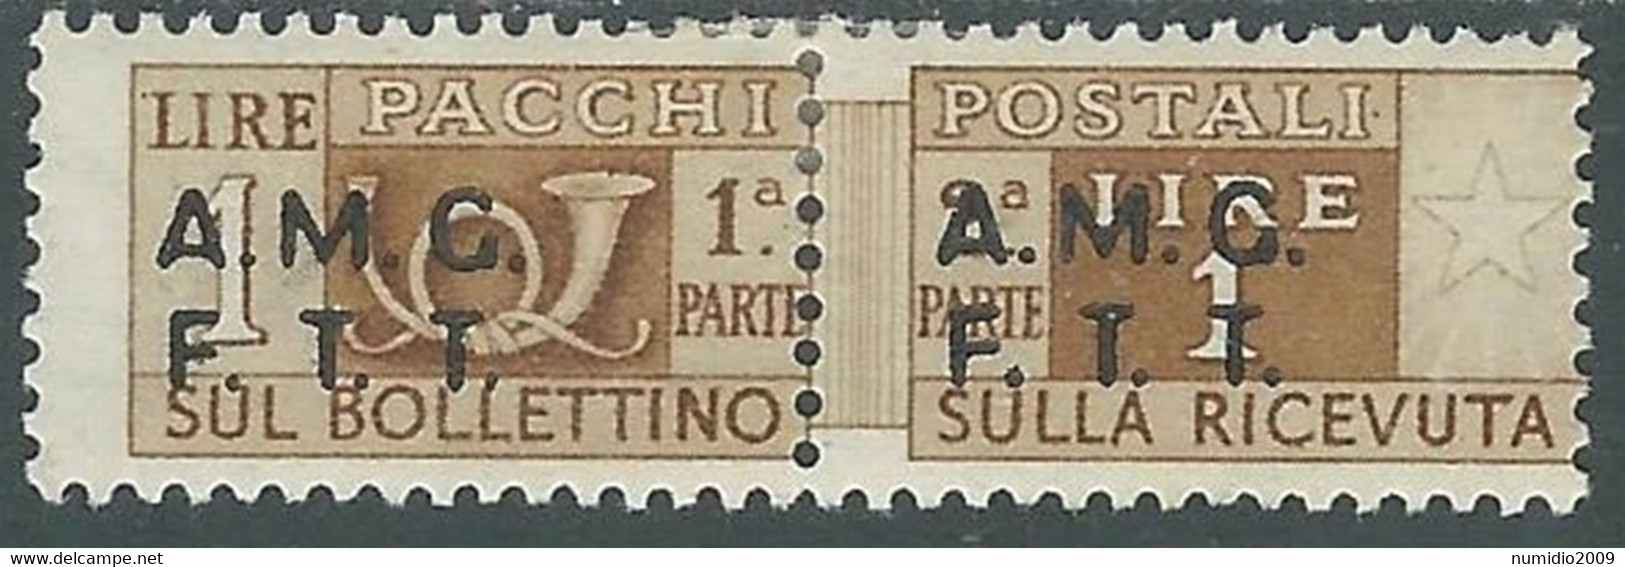 1947-48 TRIESTE A PACCHI POSTALI 1 LIRA MH * - CZ22-2 - Postpaketen/concessie